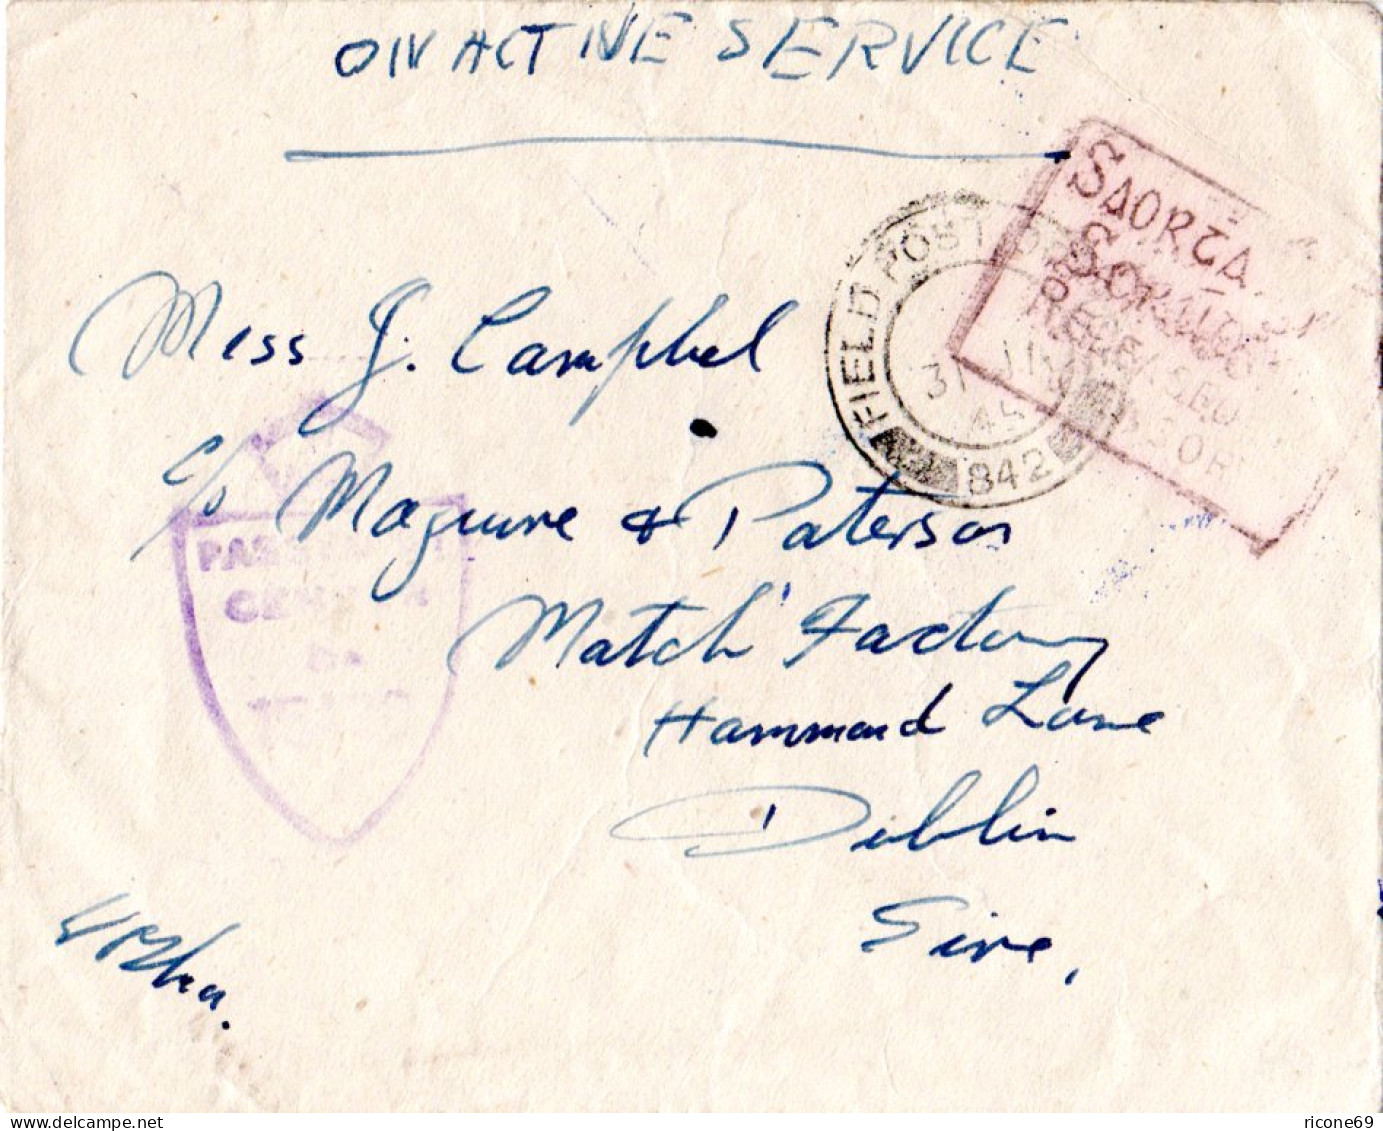 Irland 1944, FPO 842, Feldpost Brief M. Irischer Zensur Released By Censor - Covers & Documents